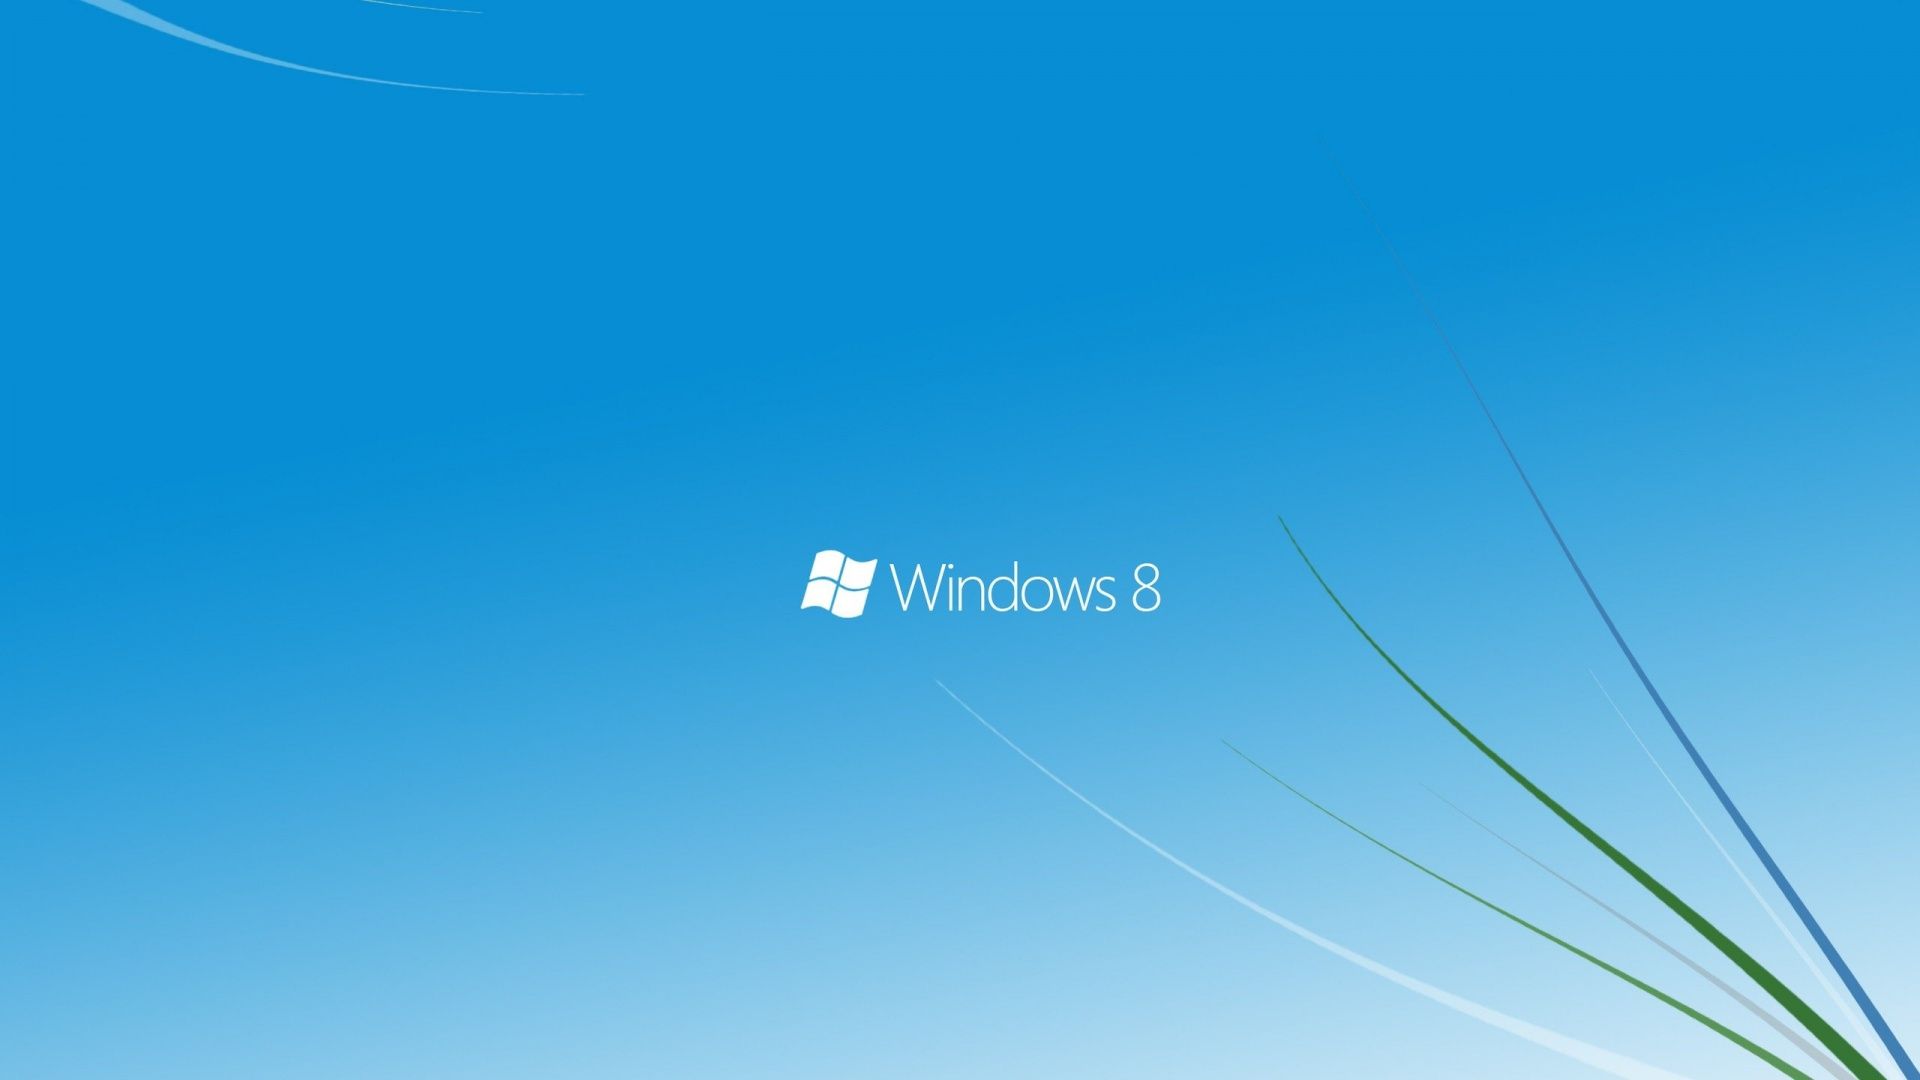 Windows 8 Basic wallpaper 243107